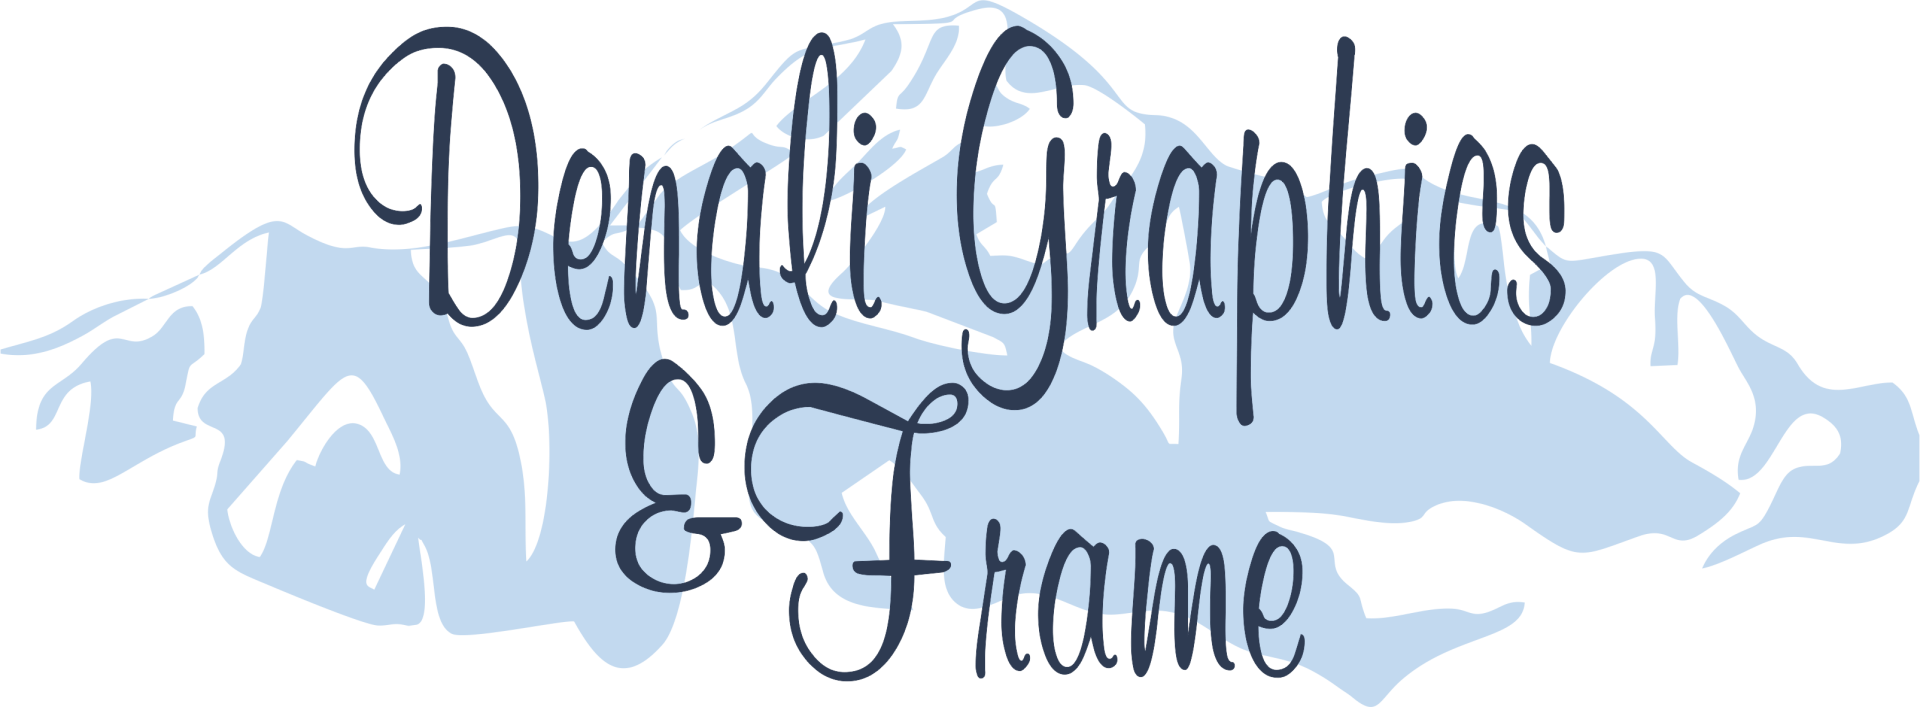 Denali Graphics & Frame